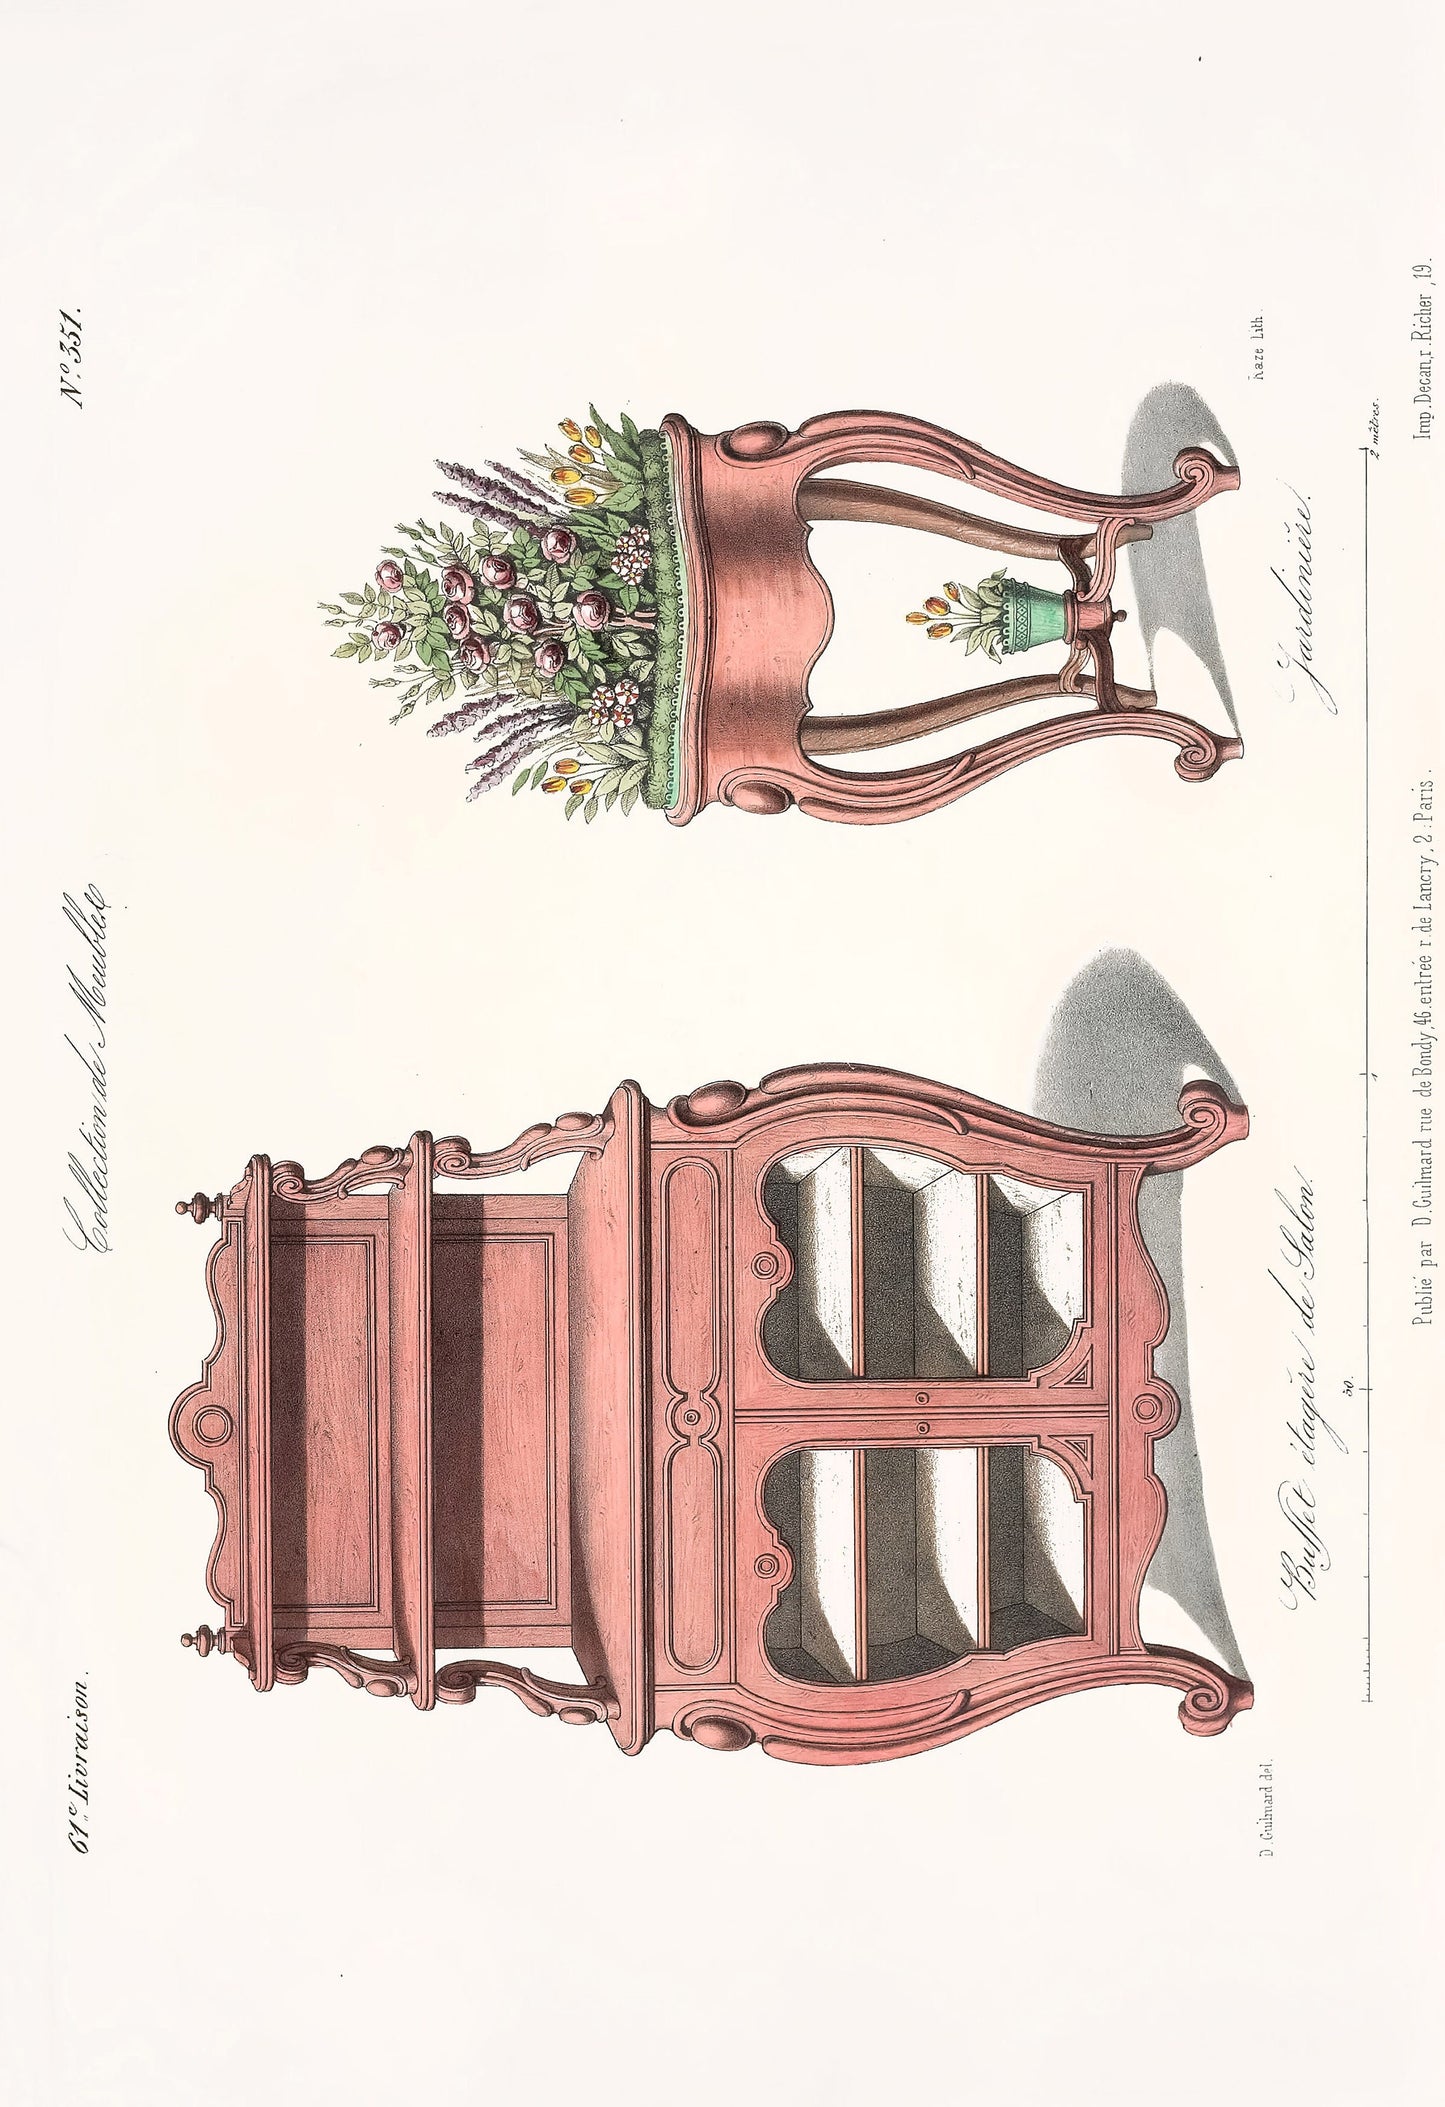 French Home Furniture & Decor Illustrations Set 5 [76 Images]